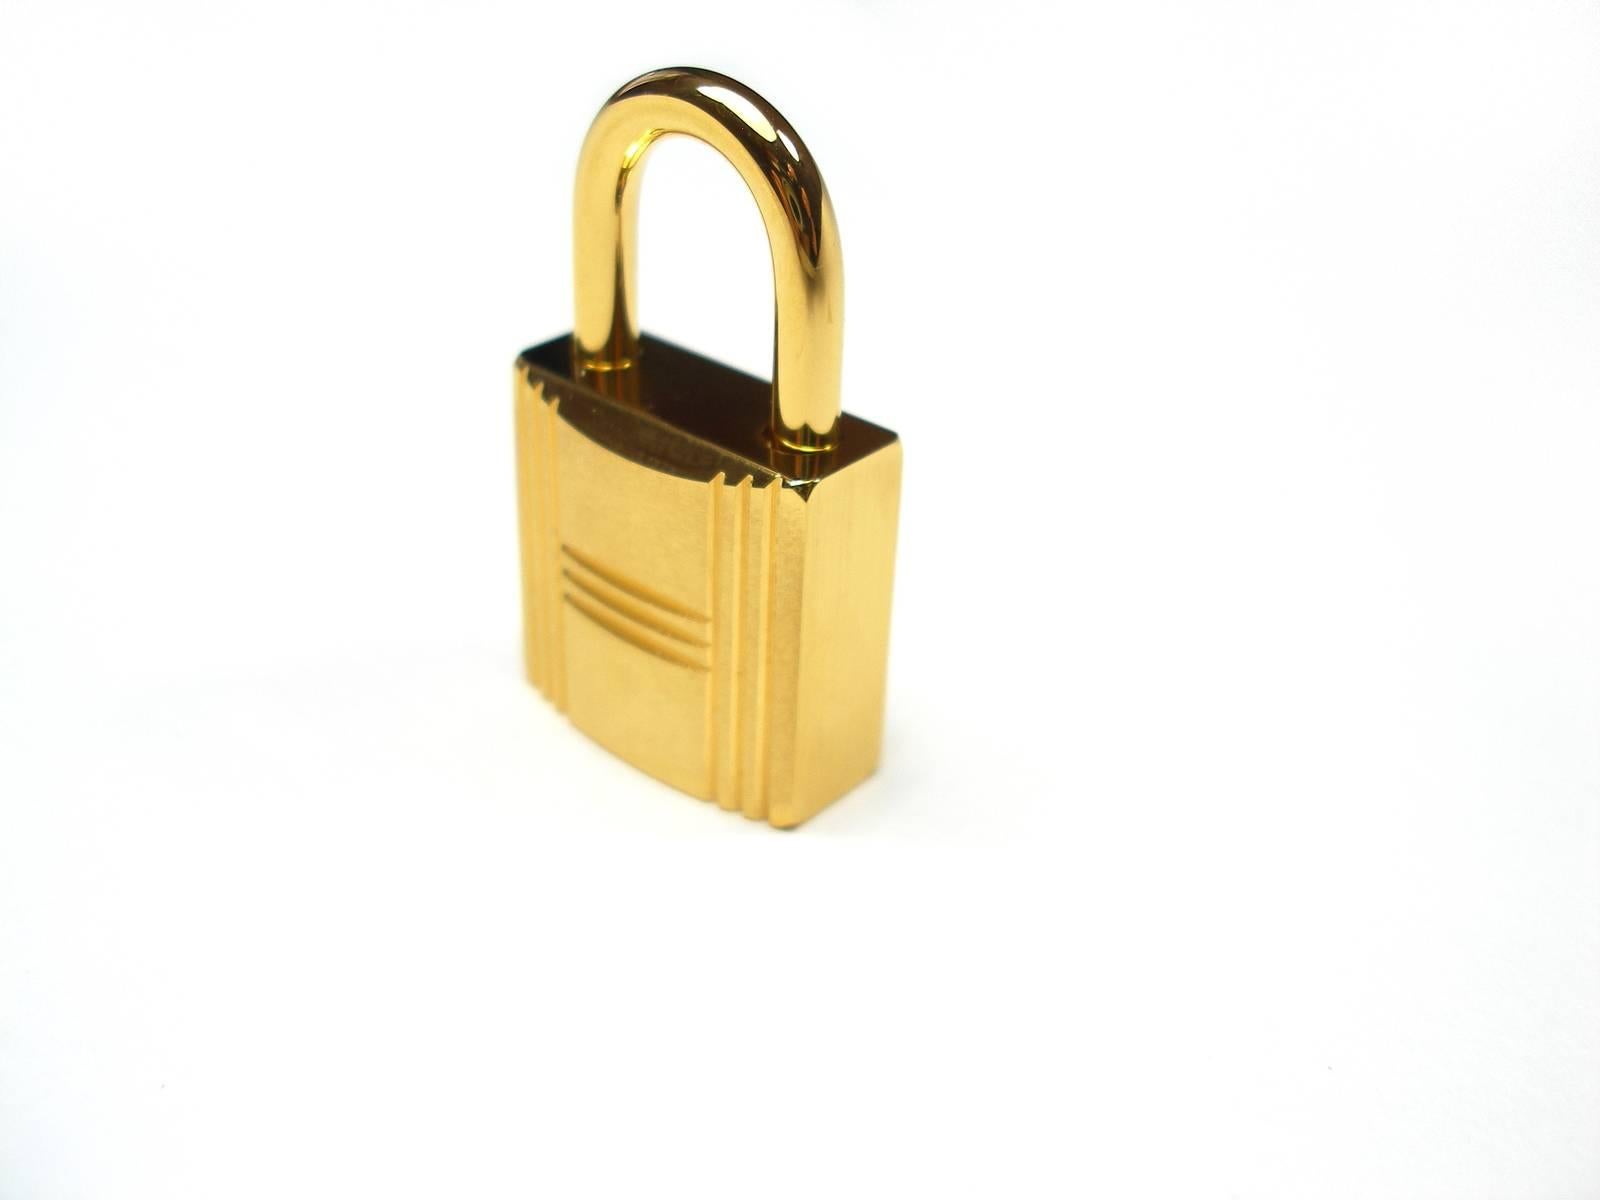 Hermès Cadenas Lock 2 Keys For Birkin or Kelly bag Gold plated shiny and brushed 1